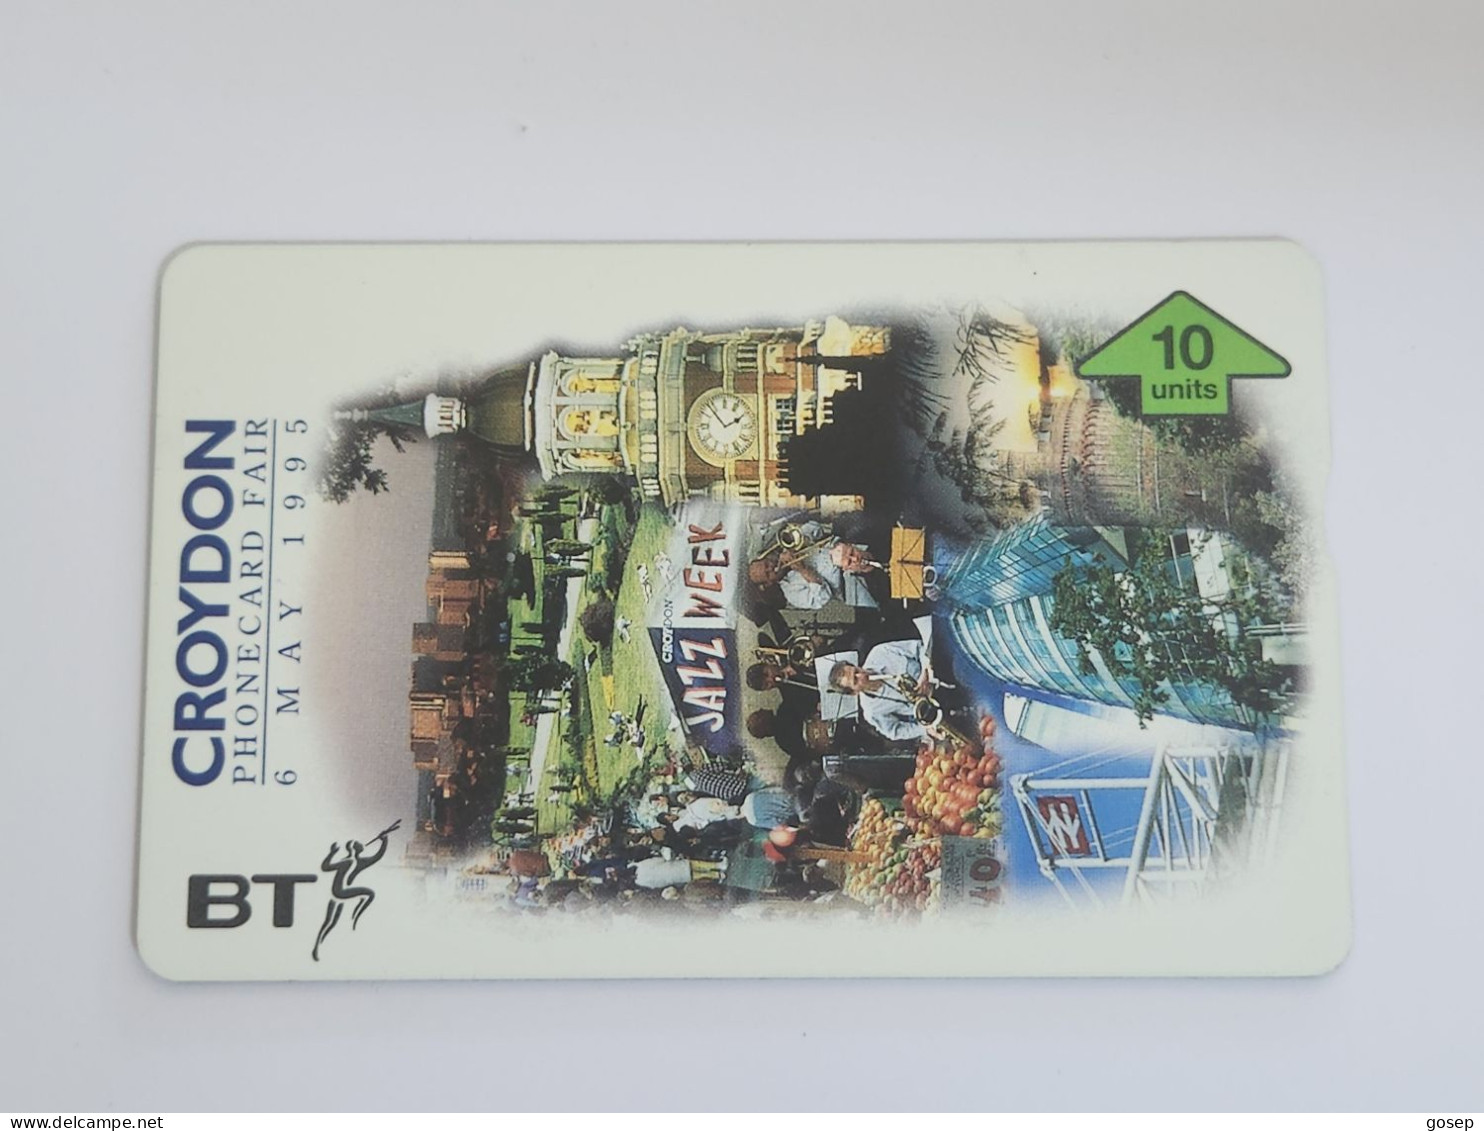 United Kingdom-(BTI126)-CROYDON FAIR-1995-(131)(10units)(510D)(tirage-1.000)(price Cataloge-15.00£-mint) - BT Emissions Internes